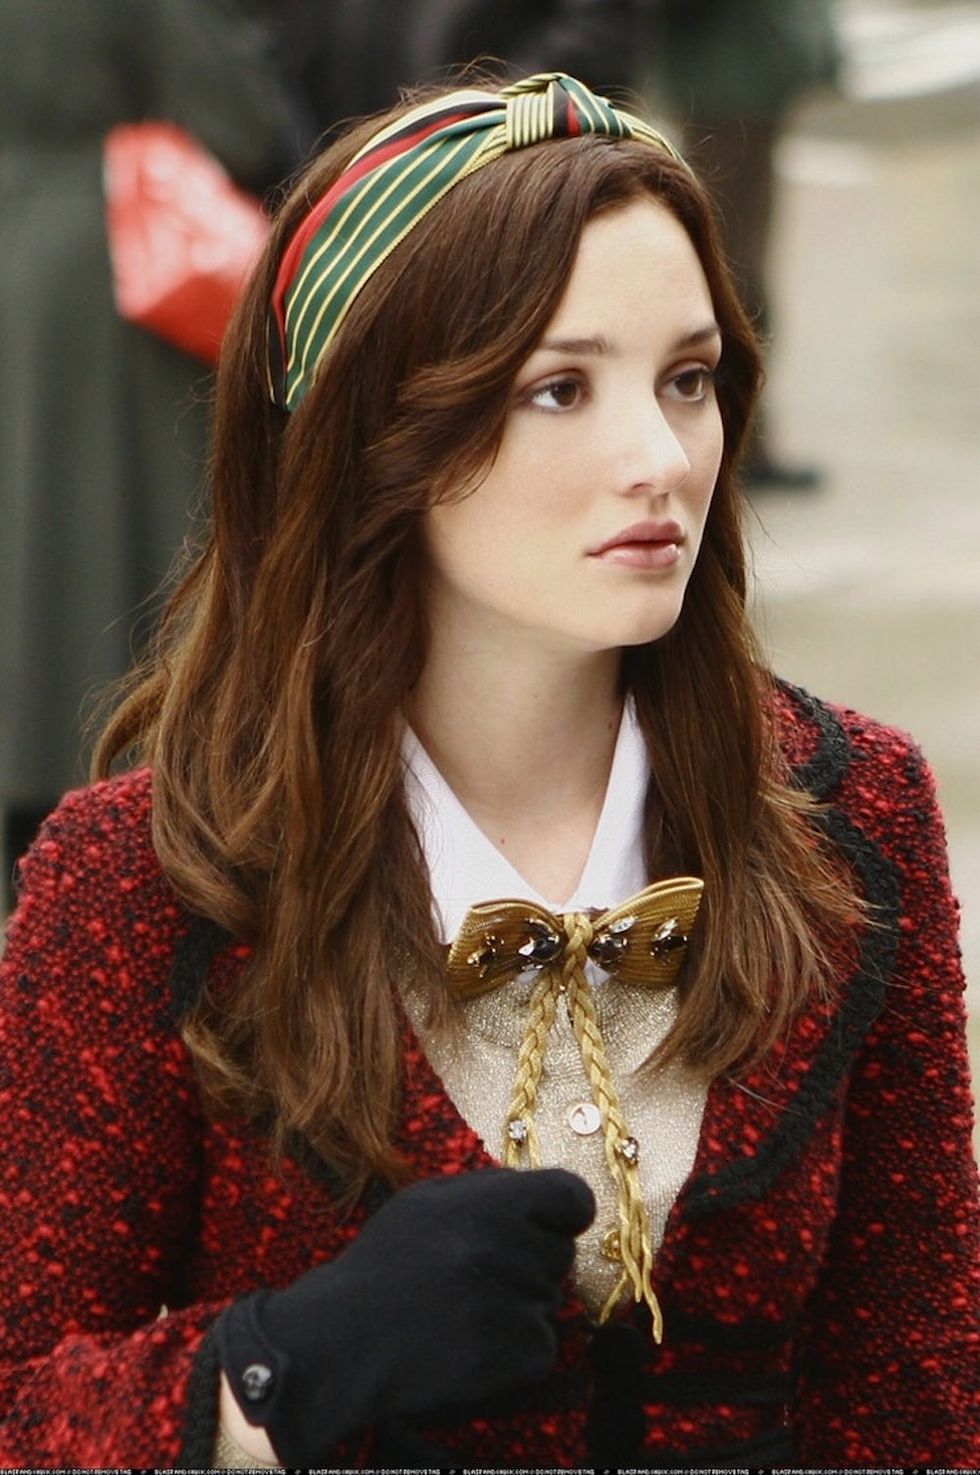 Gossip girl: 12 iconic headbands worn by Blair Waldorf